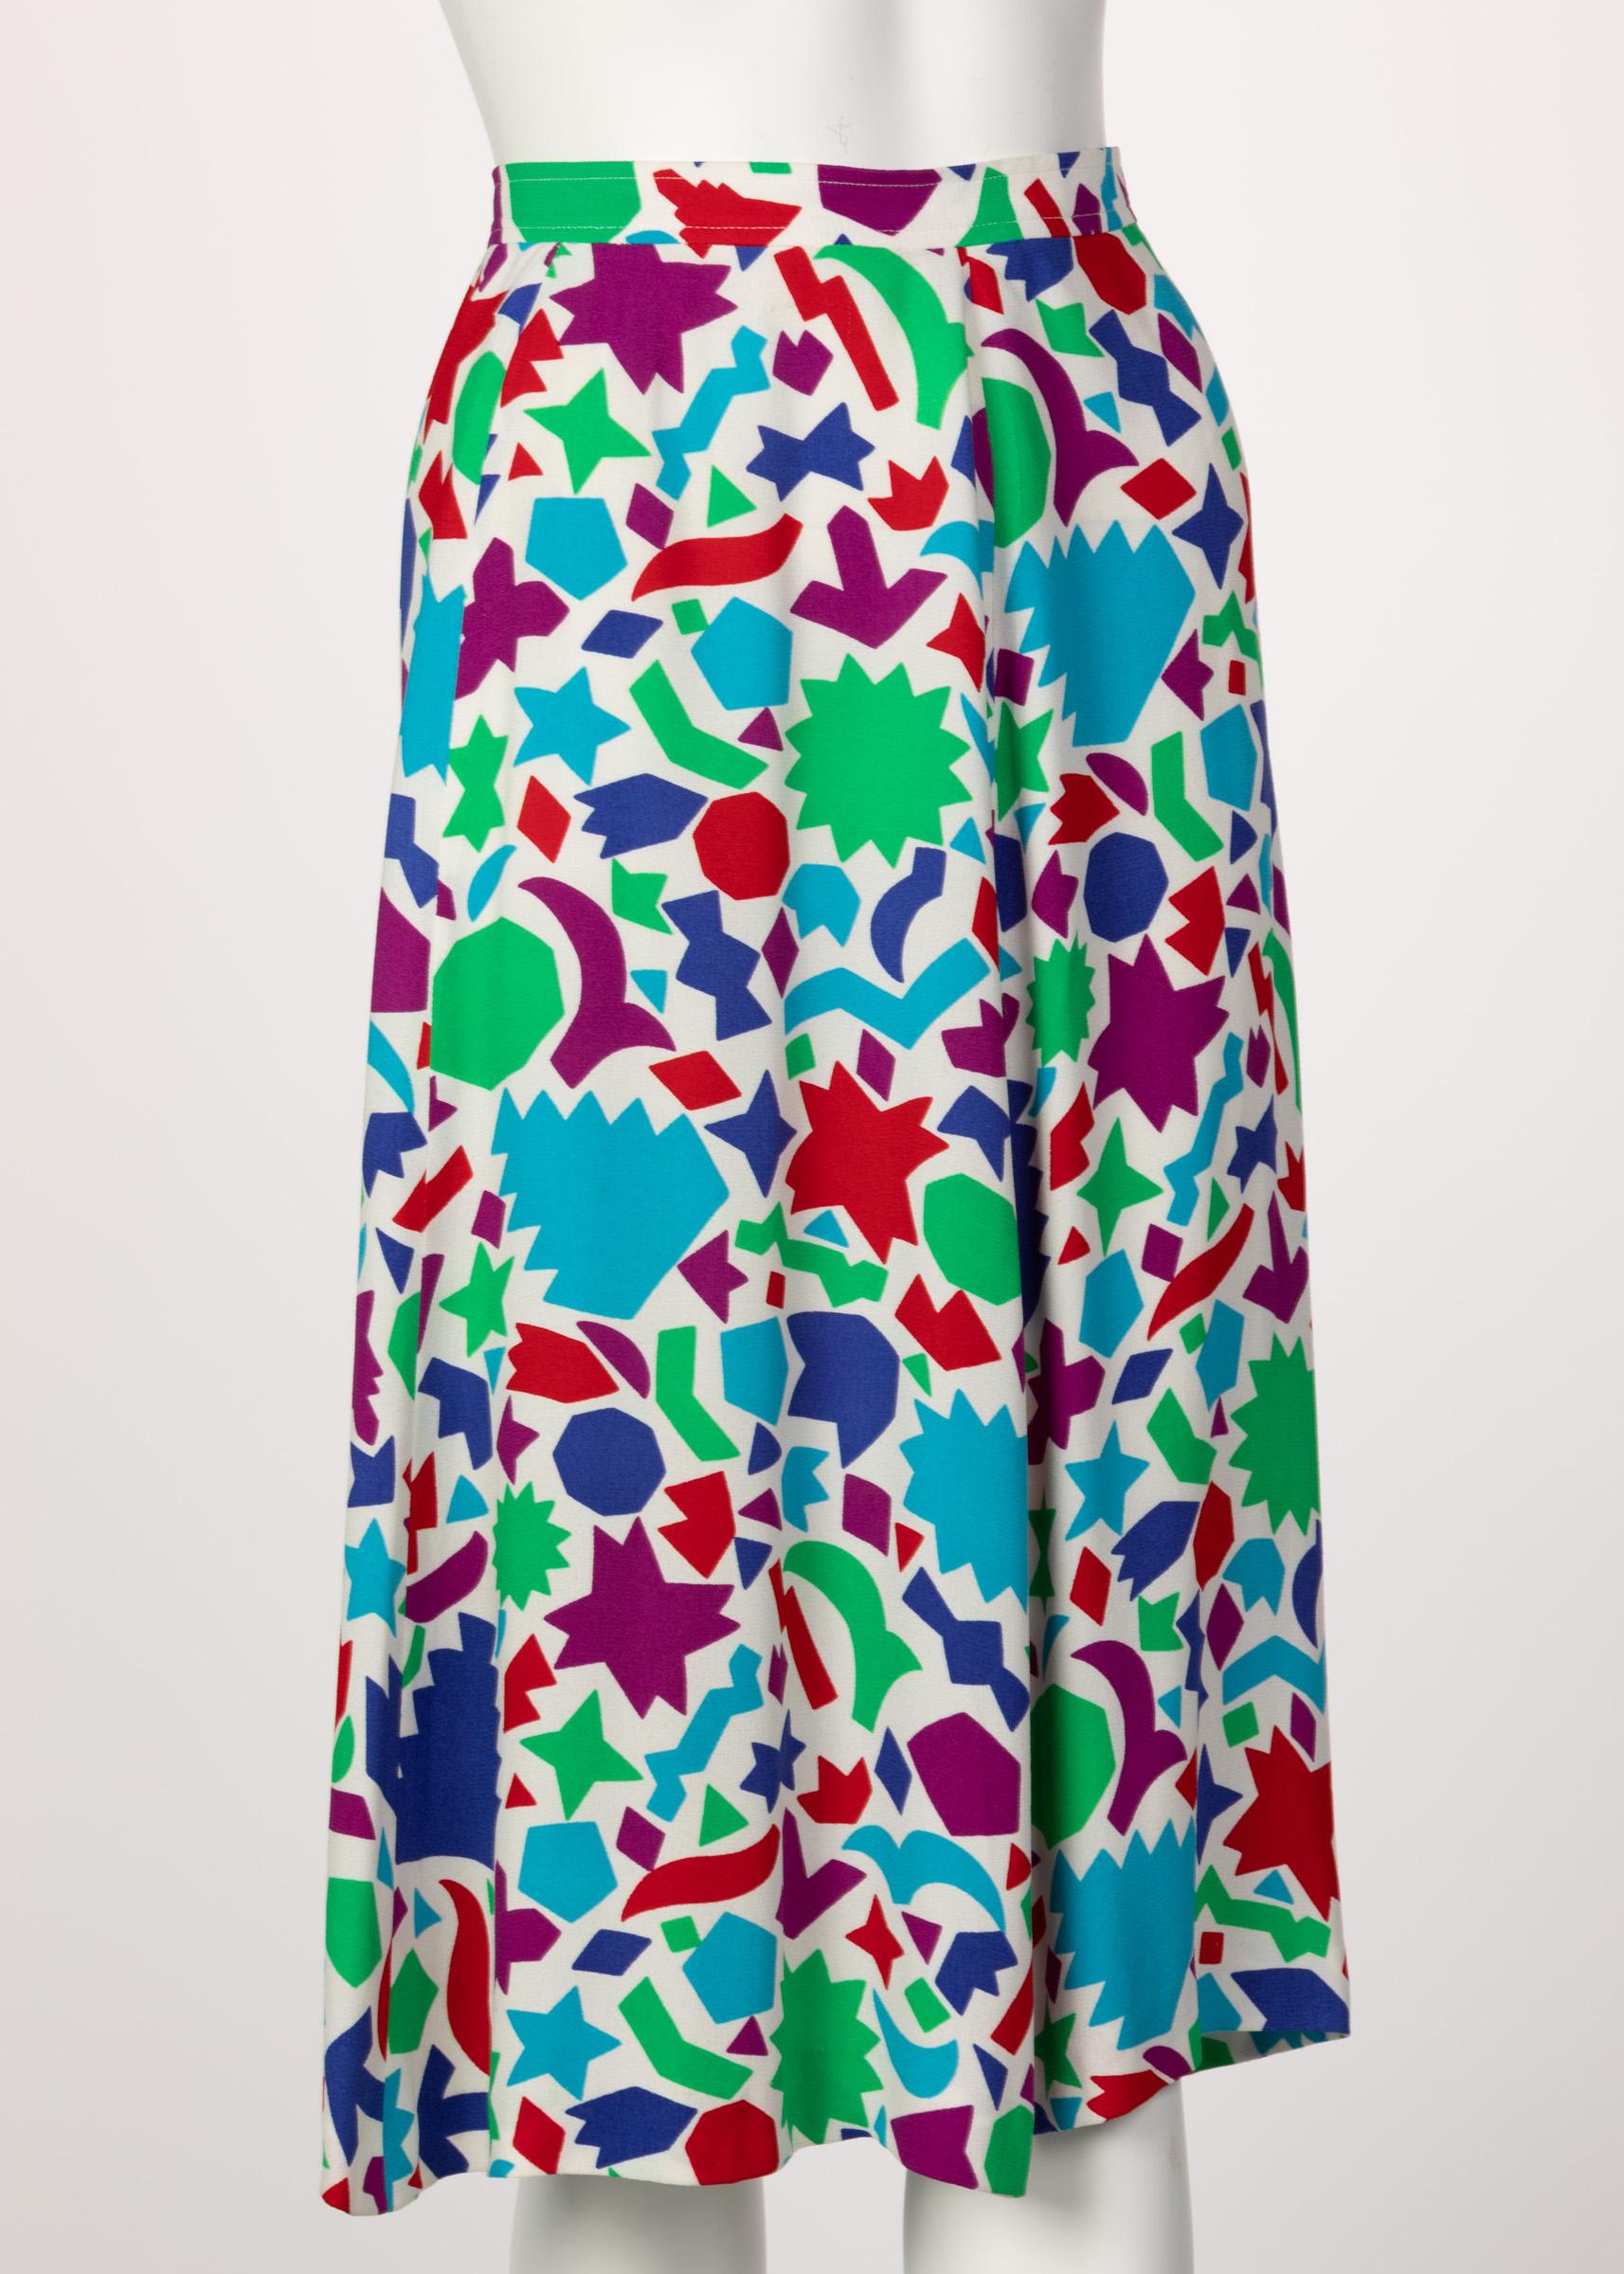 Yves Saint Laurent Matisse Inspired Skirt In Excellent Condition In Boca Raton, FL